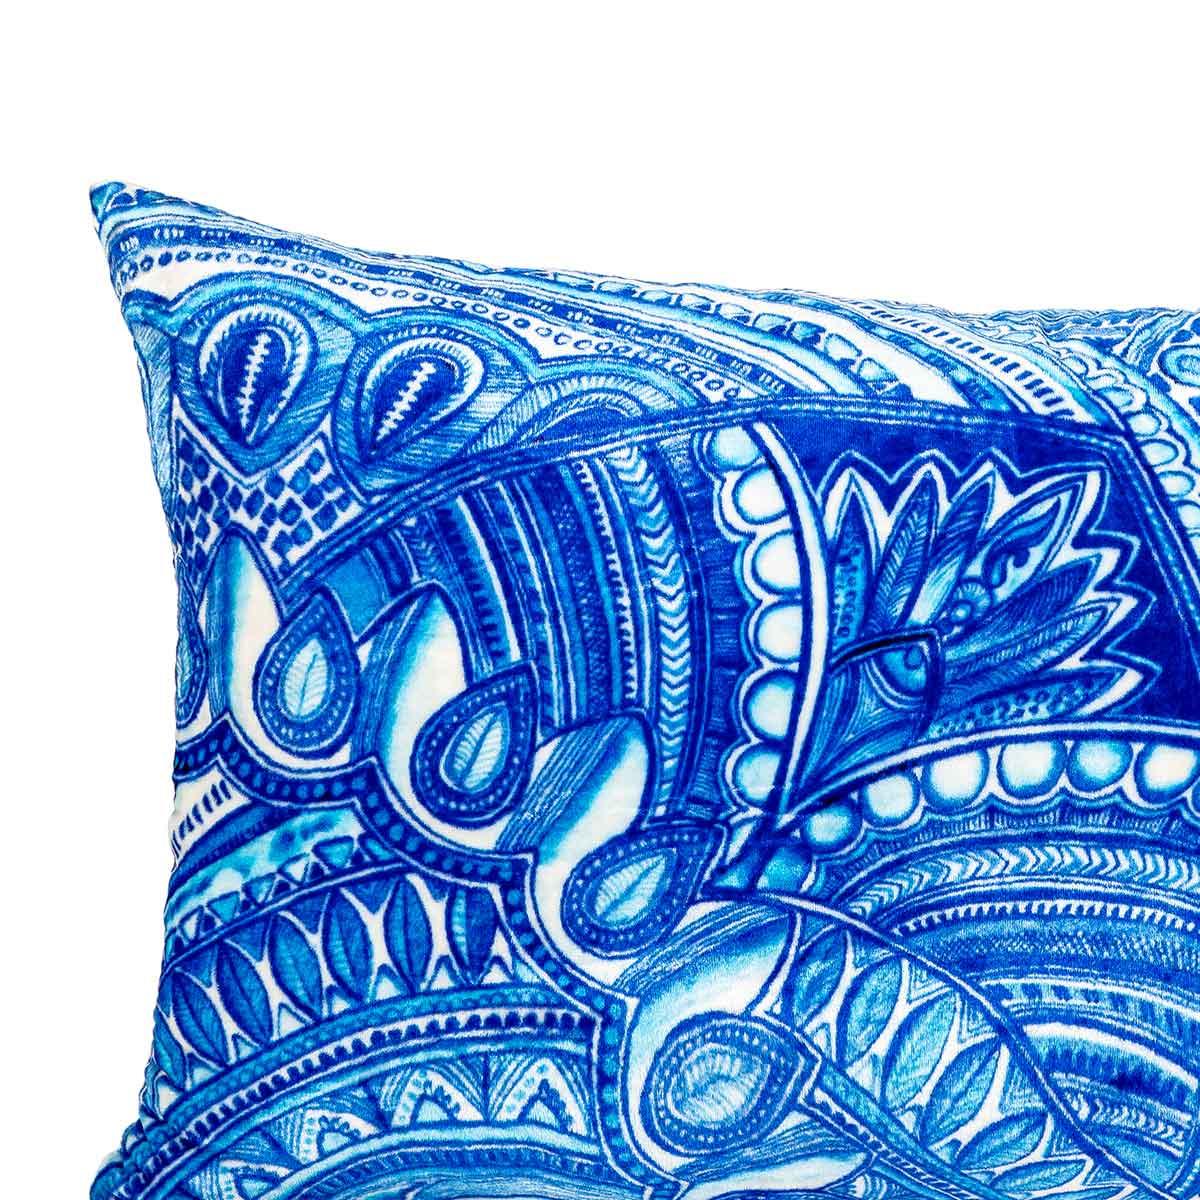 Horizon Cushion Cover Blue - Home4u